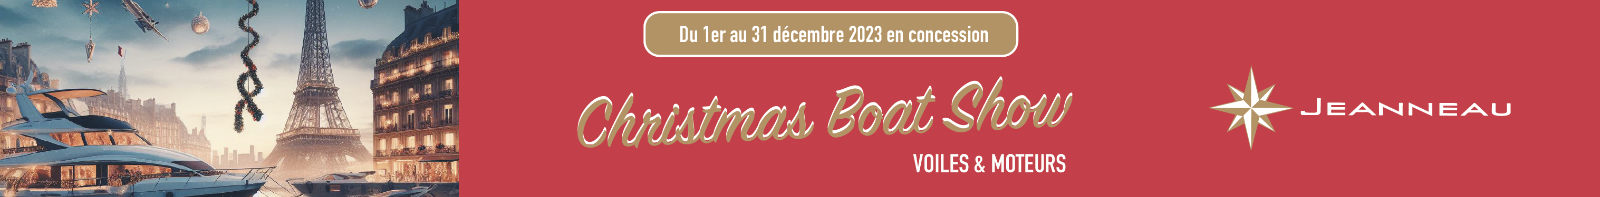 Christmas Show Jeanneau 2023 - bannière header Christmas Boat Show Plan de travail 1